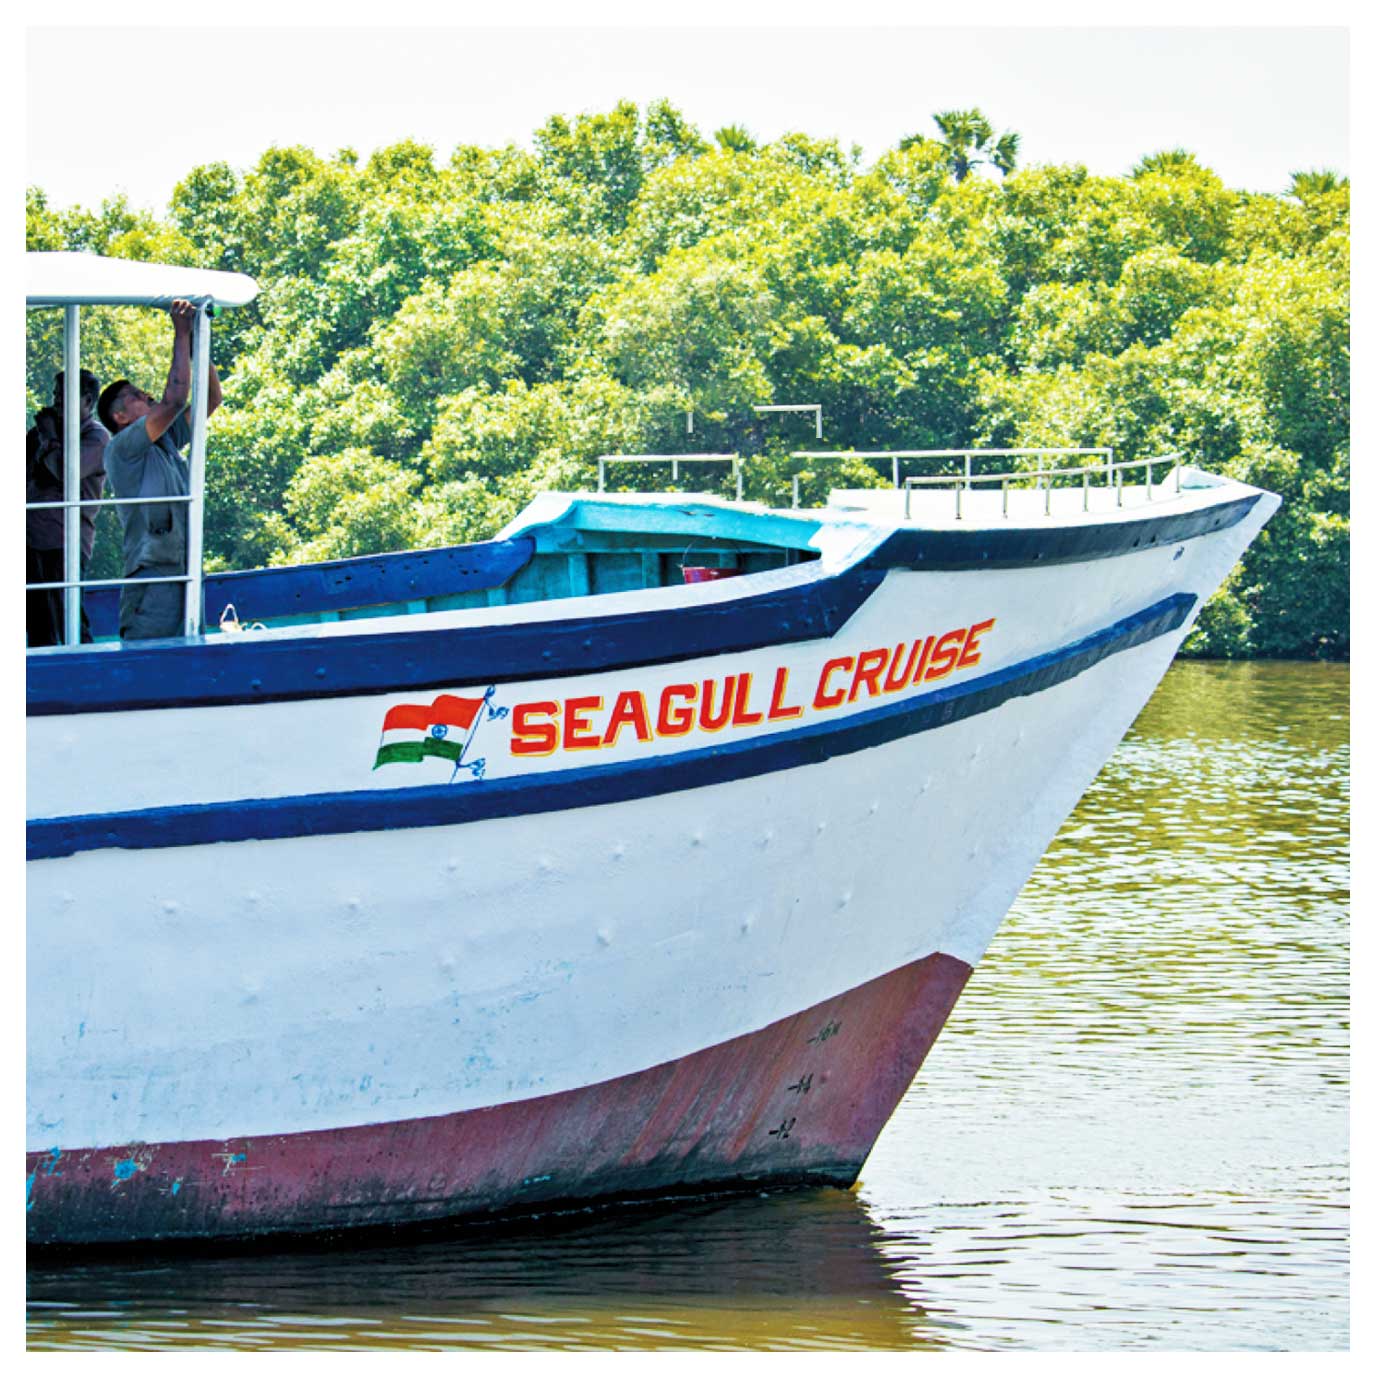 Seagull Cruise Boating Ride 2 - Pondicherry